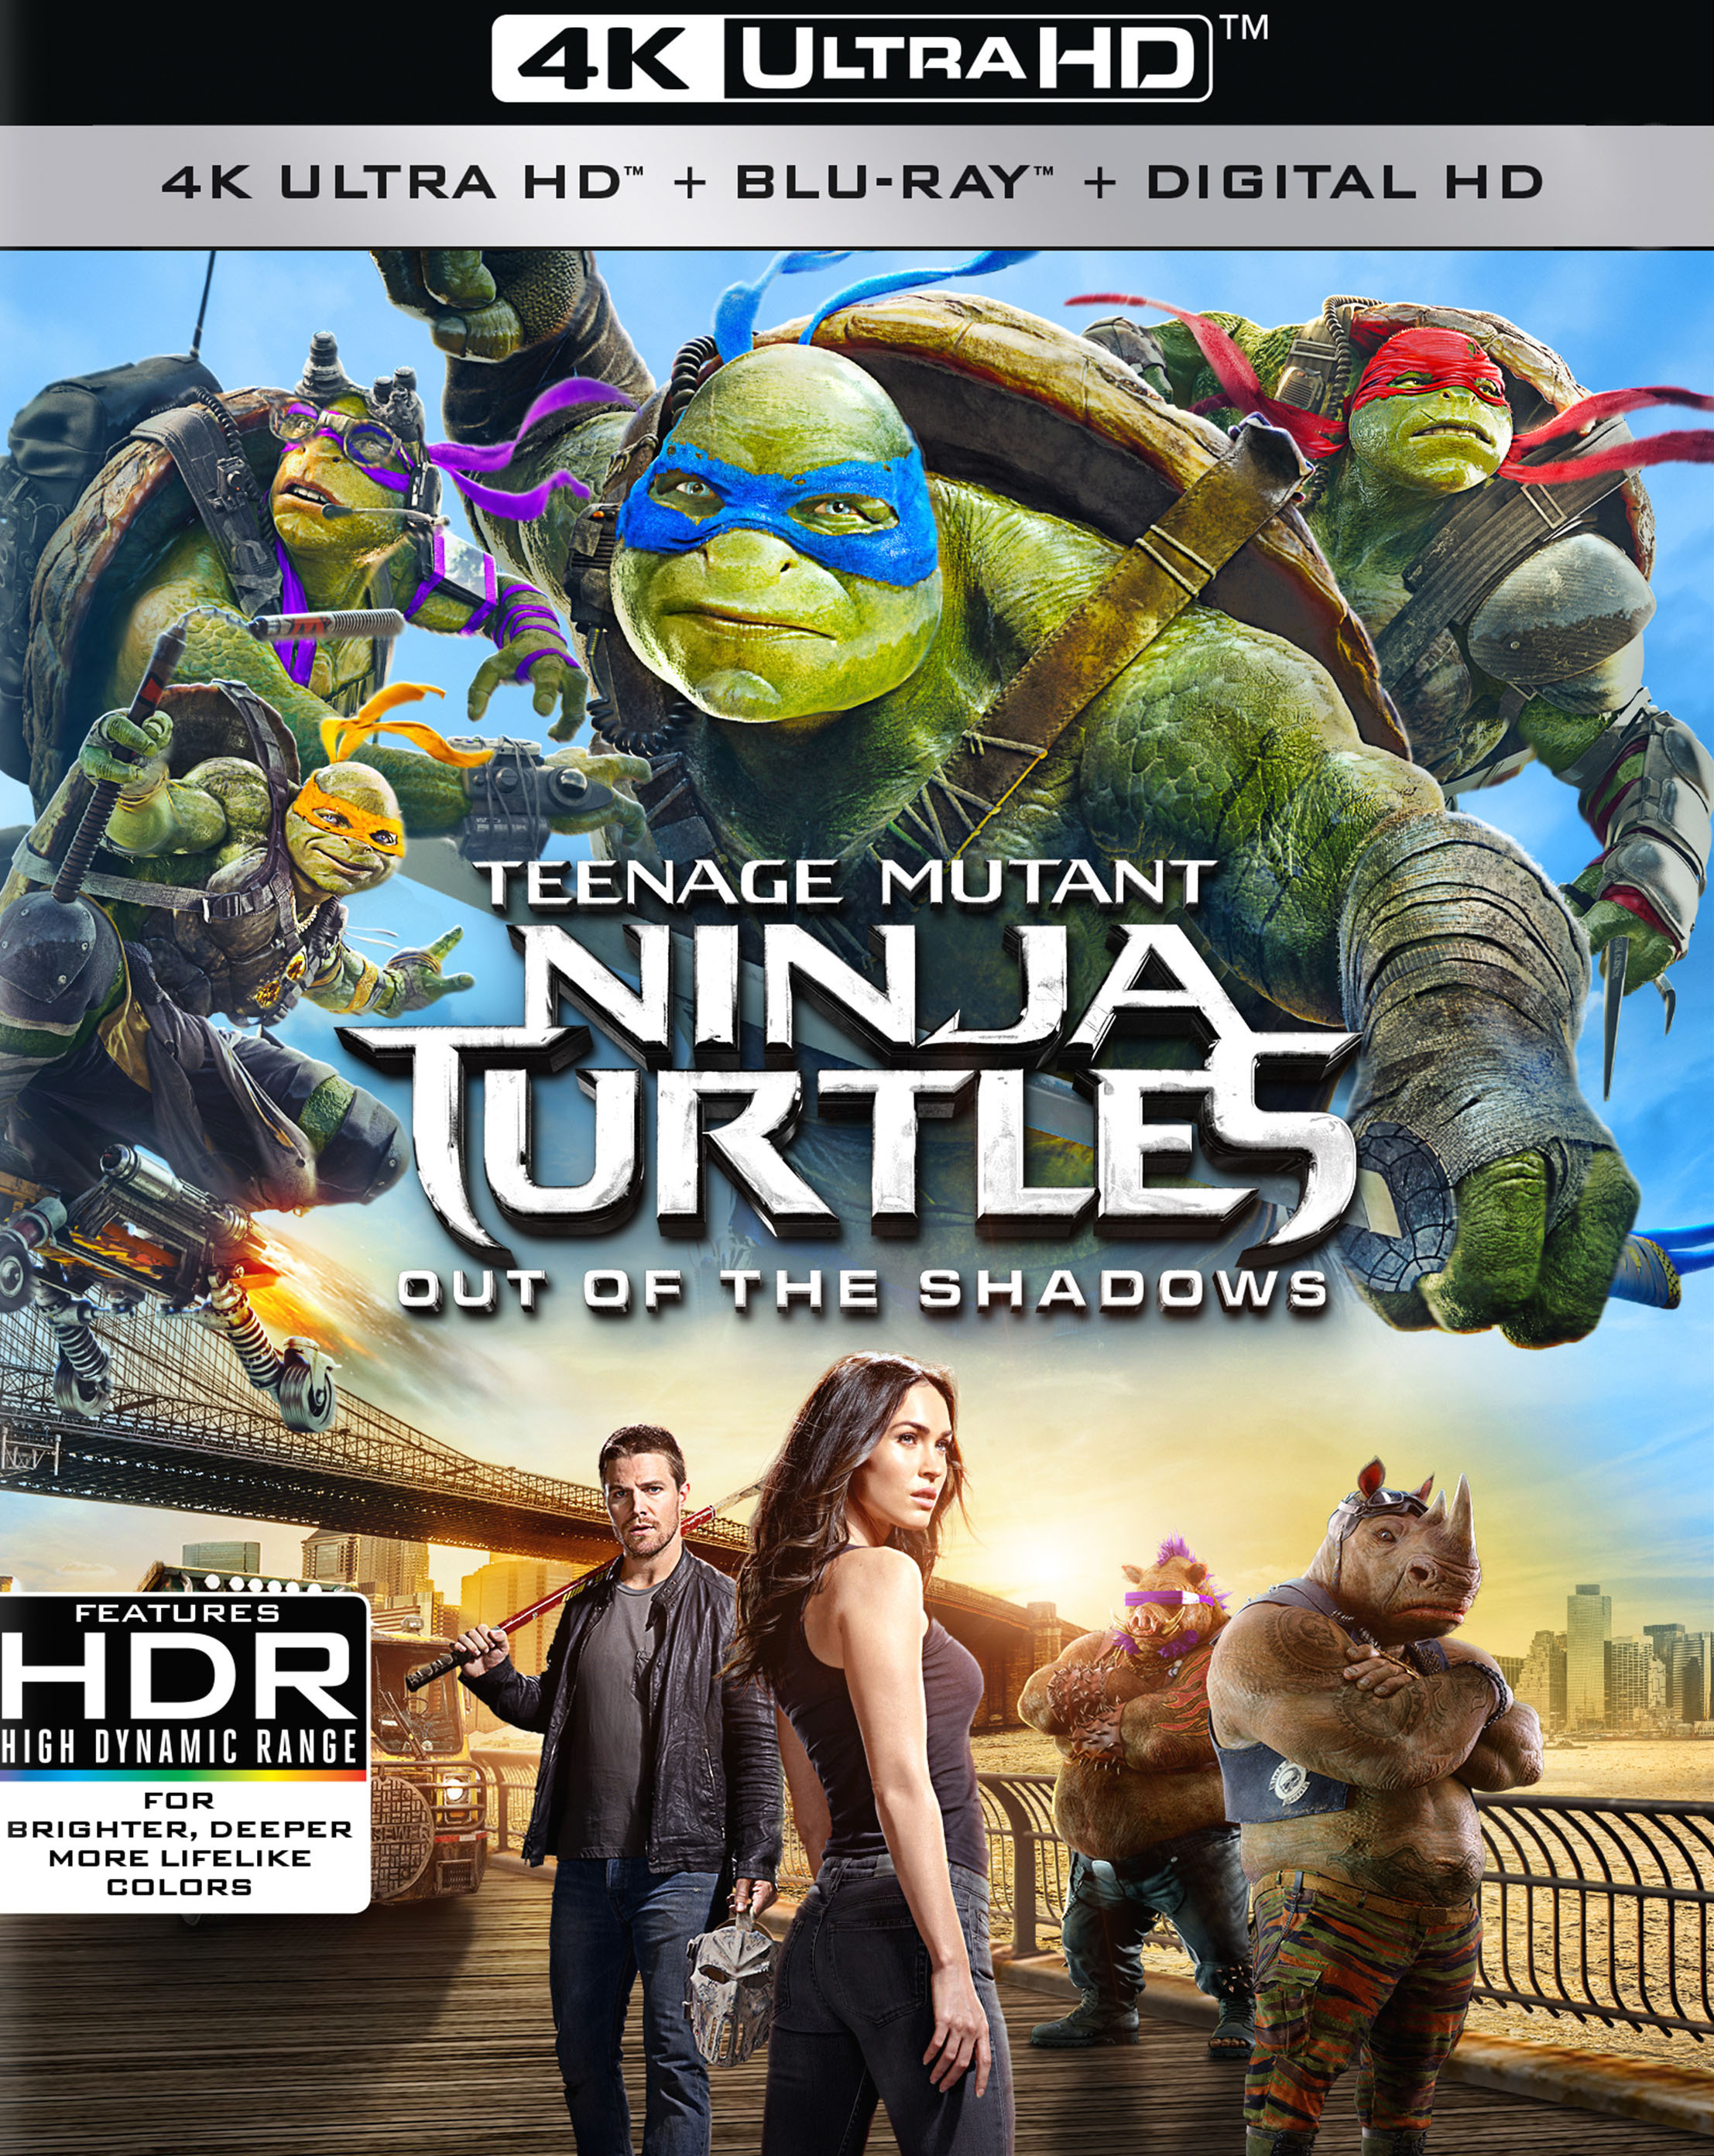 Teenage Mutant Ninja Turtles: Out of the Shadows 2014 (4K ULTRA HD + BLURAY)